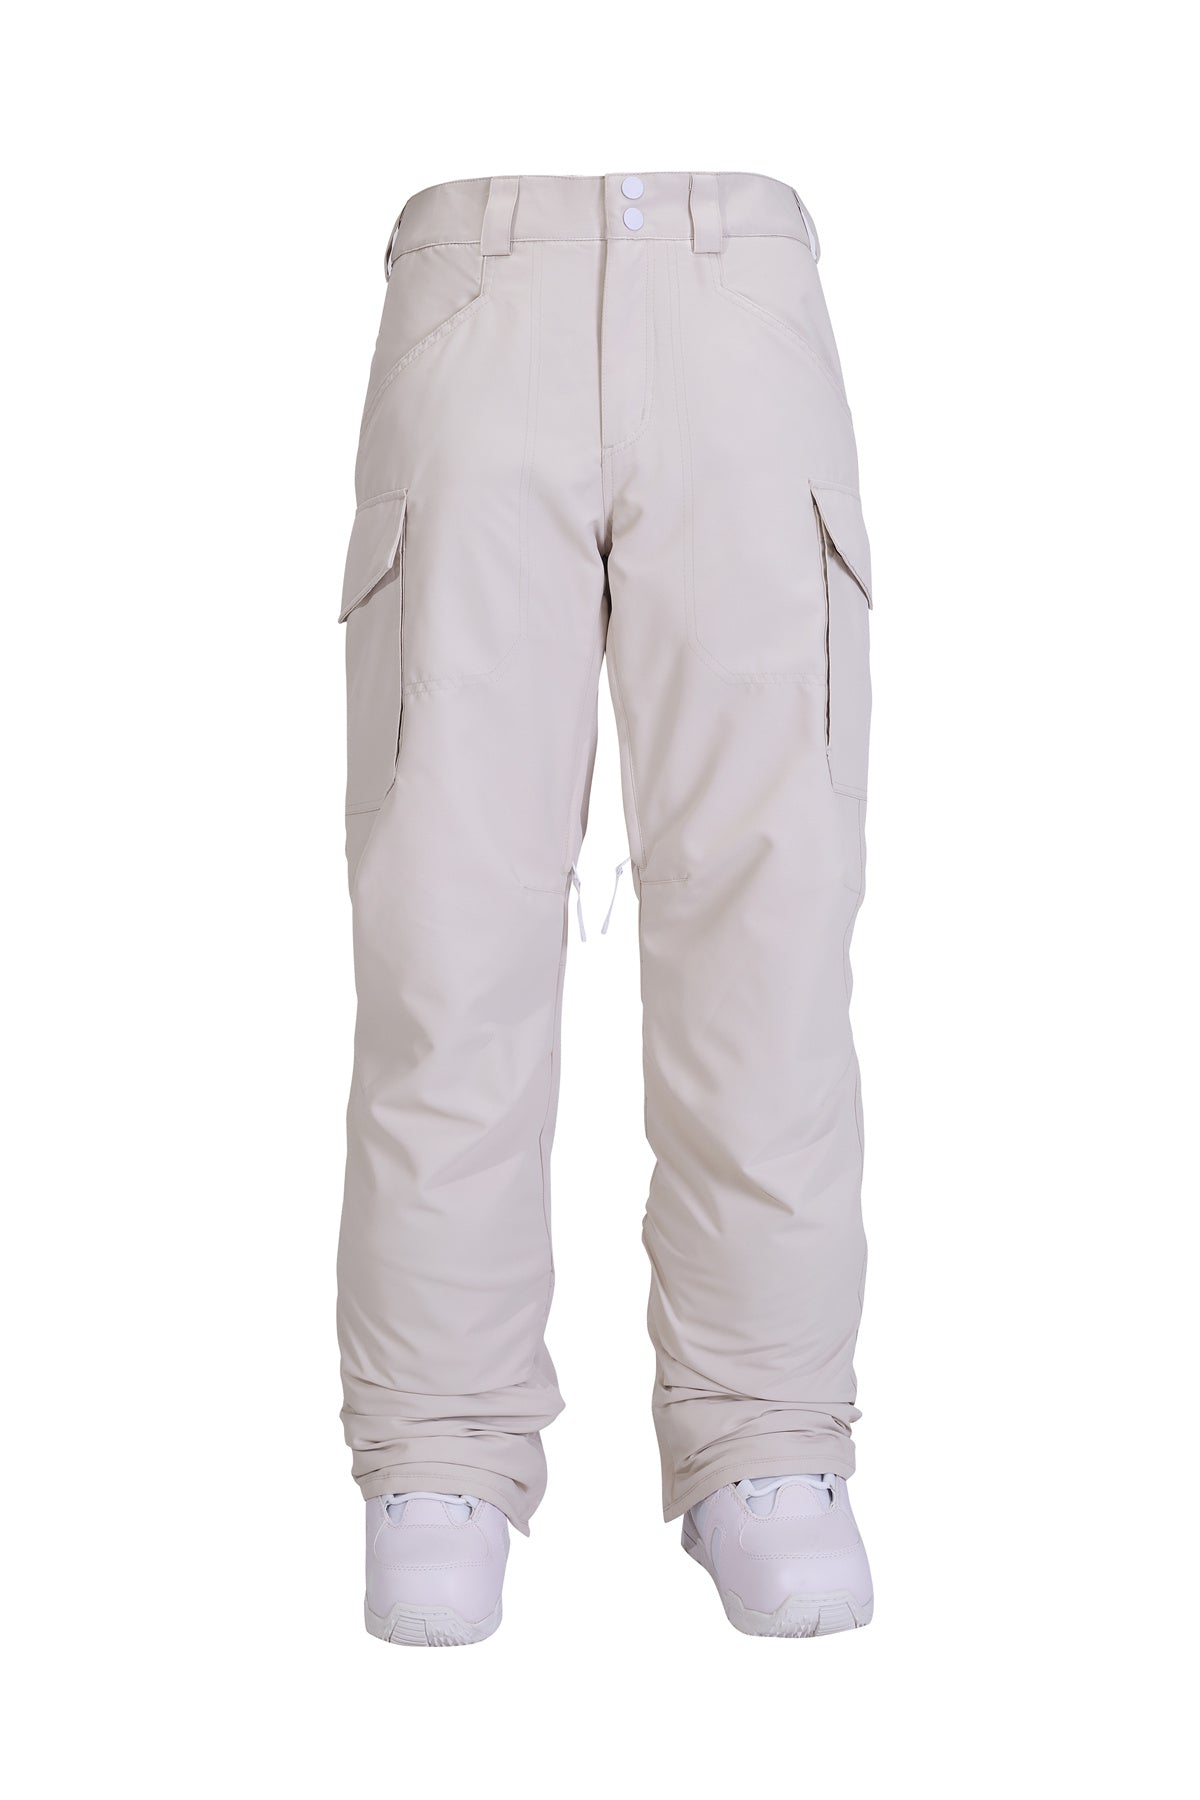 SNBOCON Mens Cargo Snow pants Regular fit